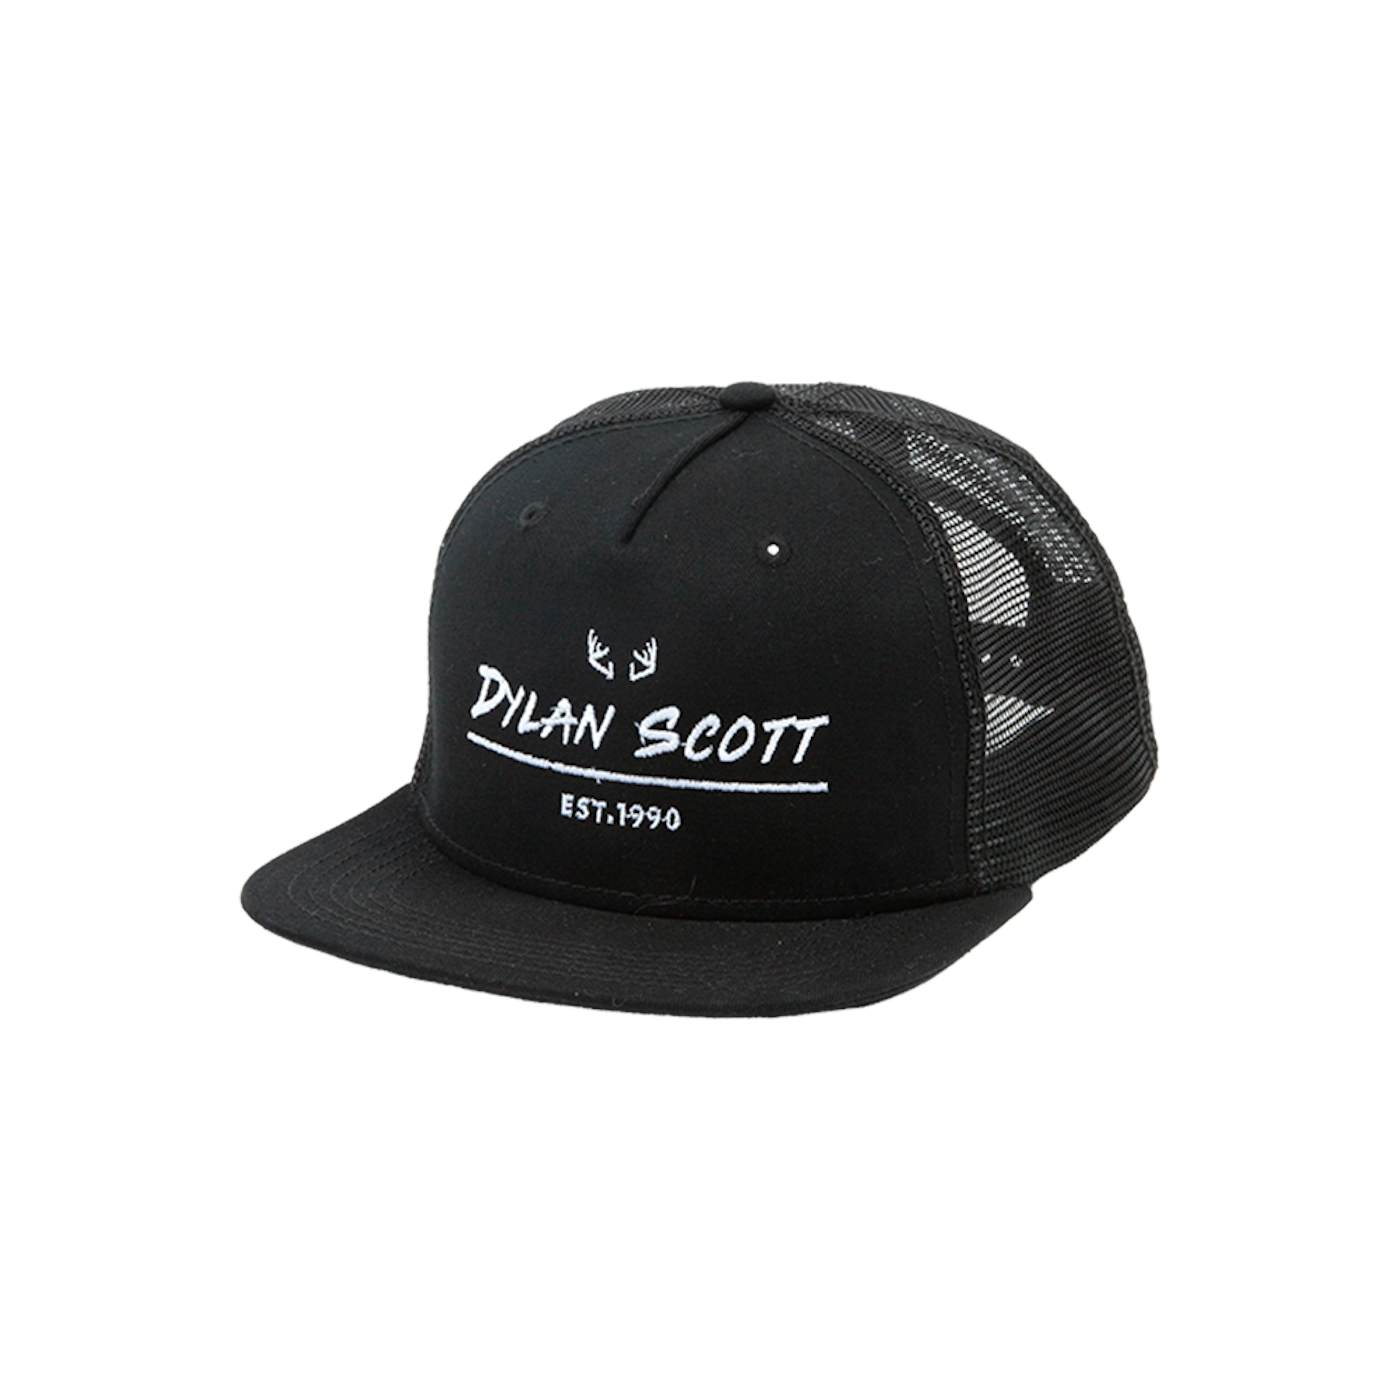 Dylan Scott Antler Hat